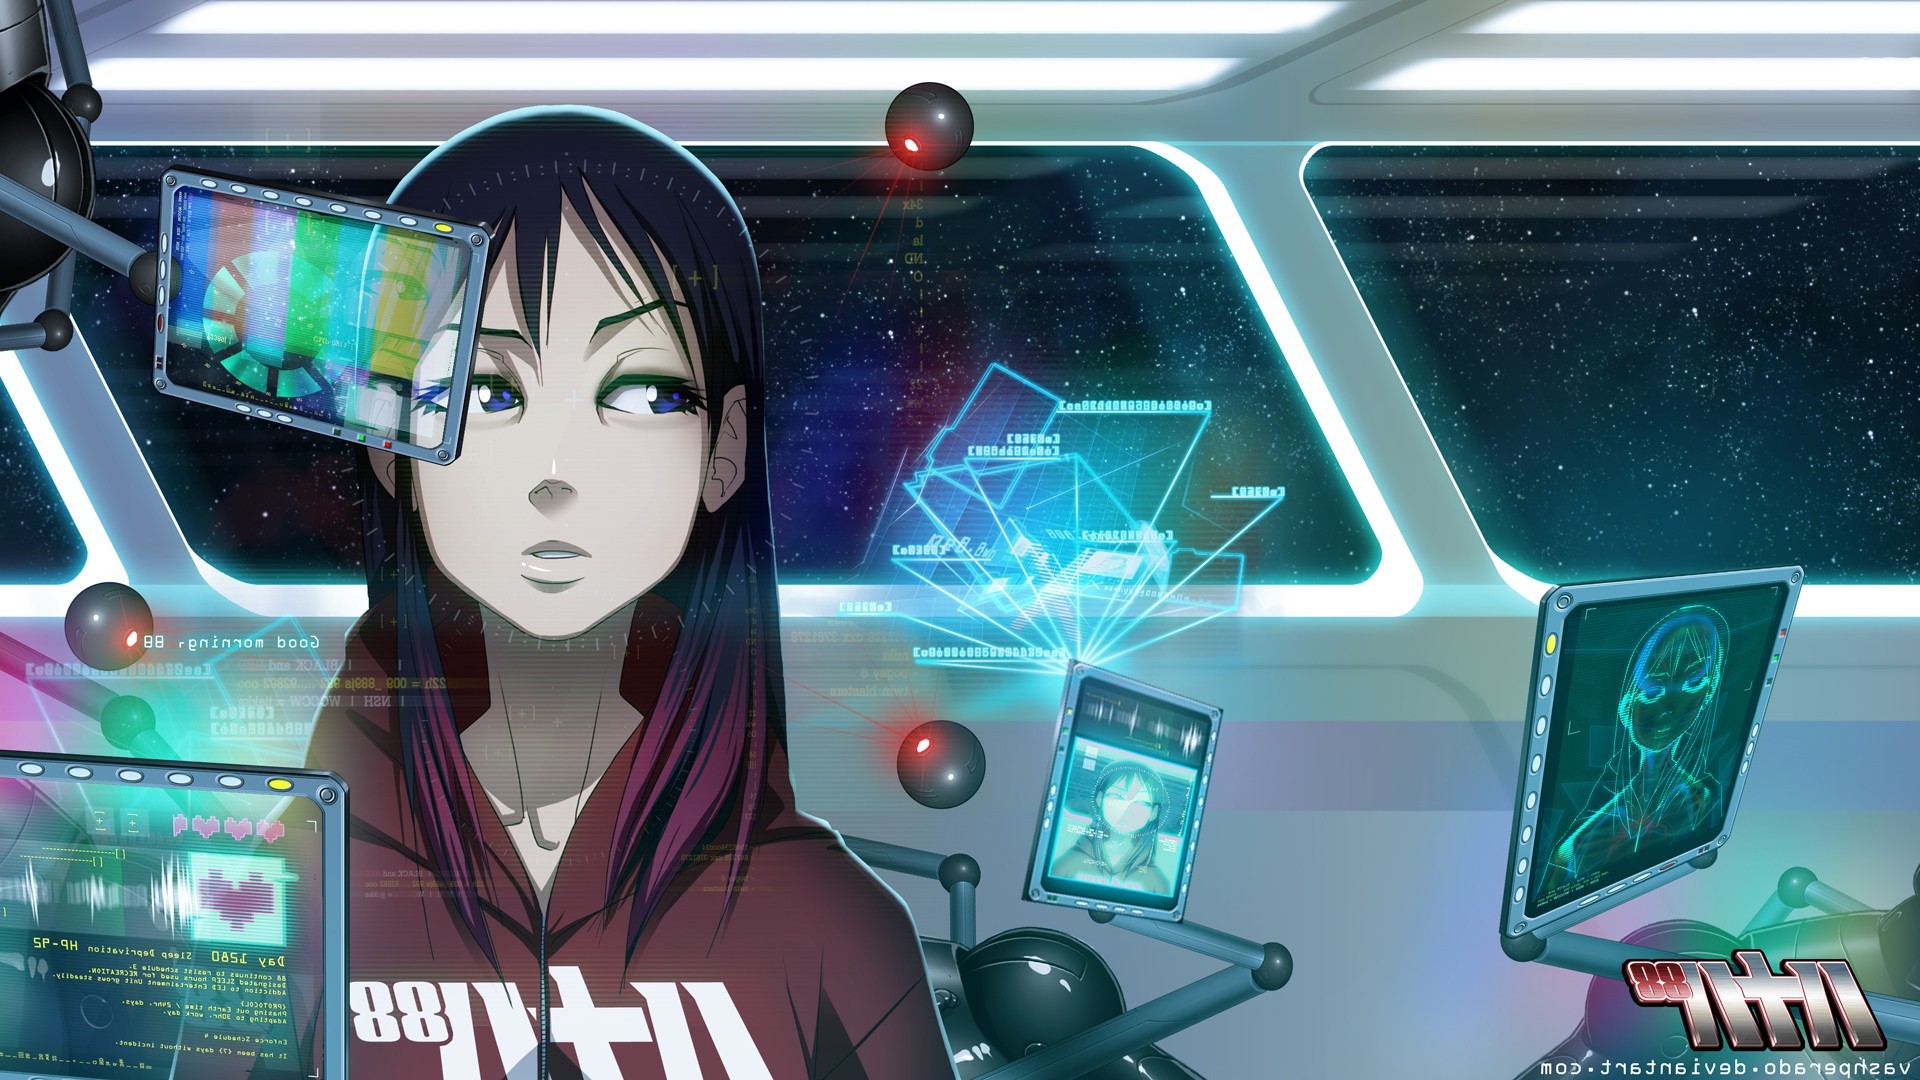 Original Characters, Vashperado, Spaceship, Interfaces, Cyberpunk, Futuristic, Anime Girls, 88 Girl Wallpapers HD / Desktop and Mobile Backgrounds